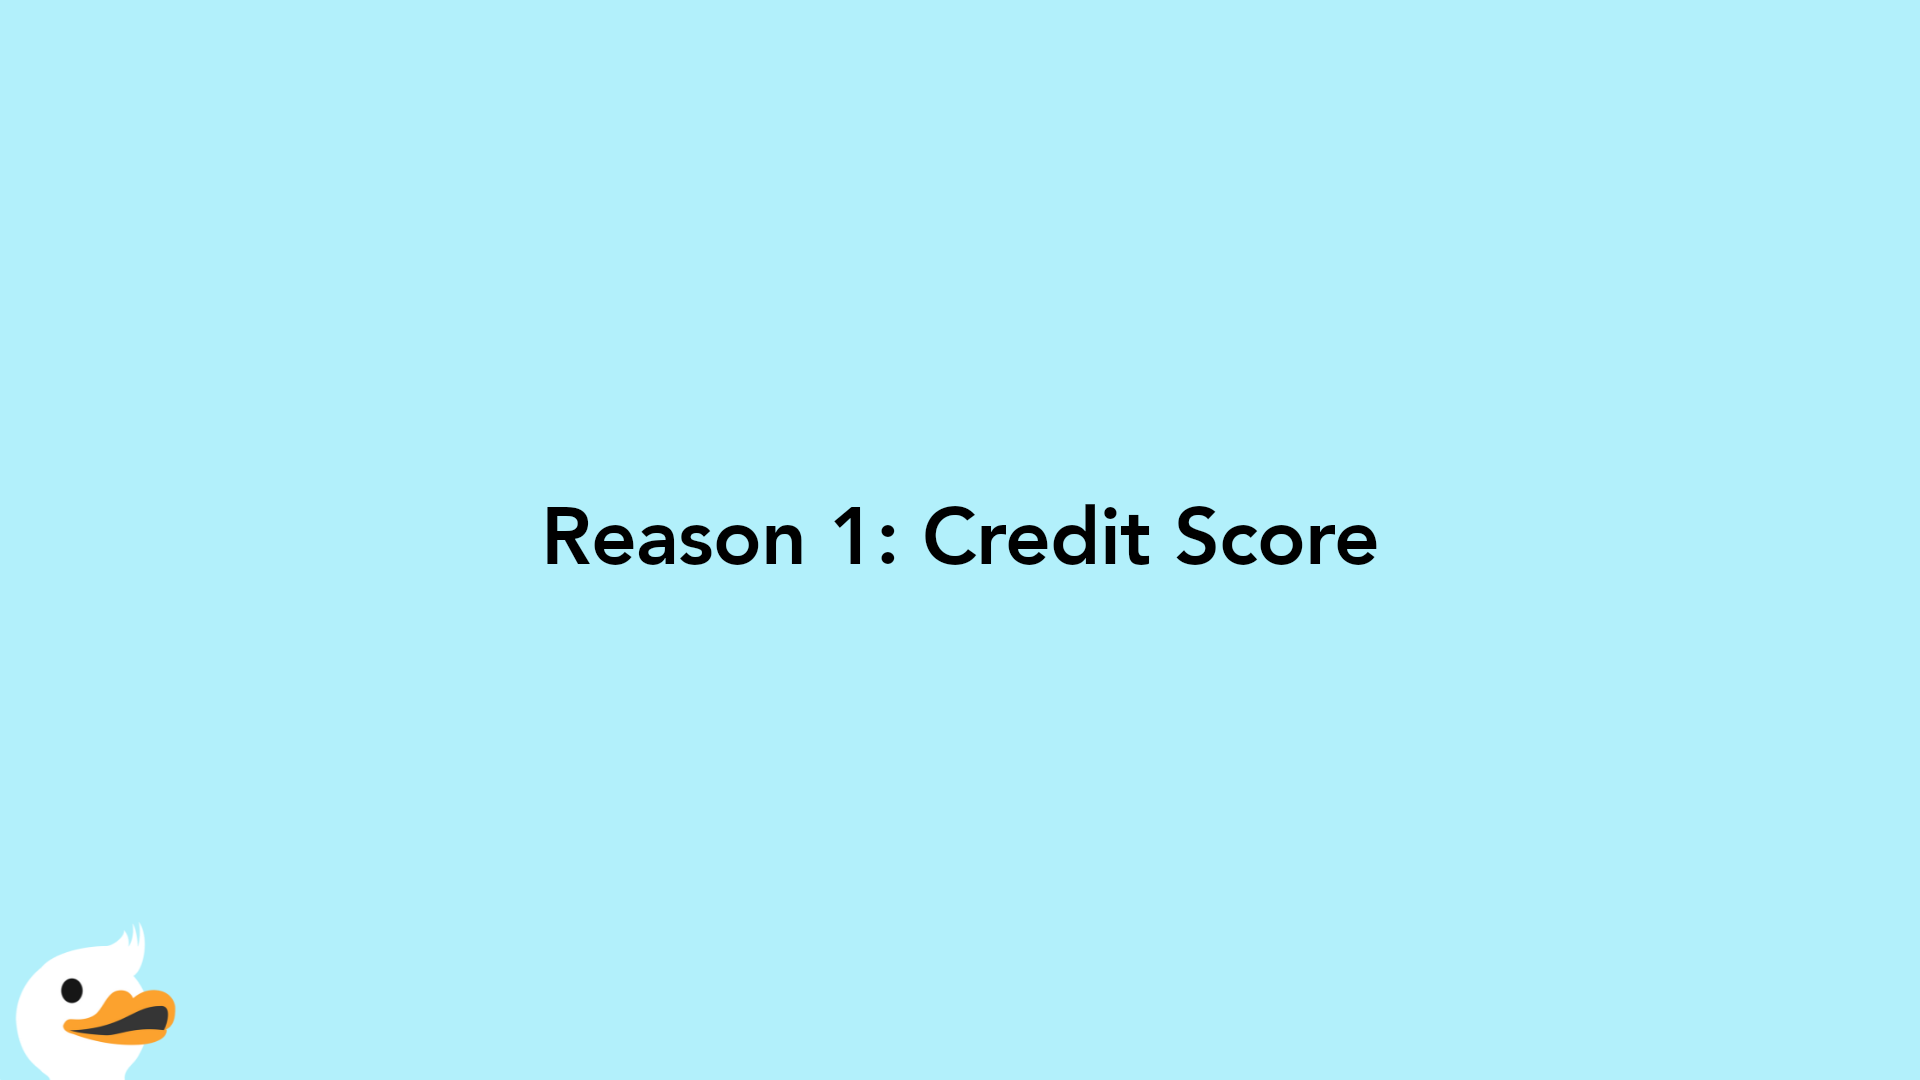 Reason 1: Credit Score